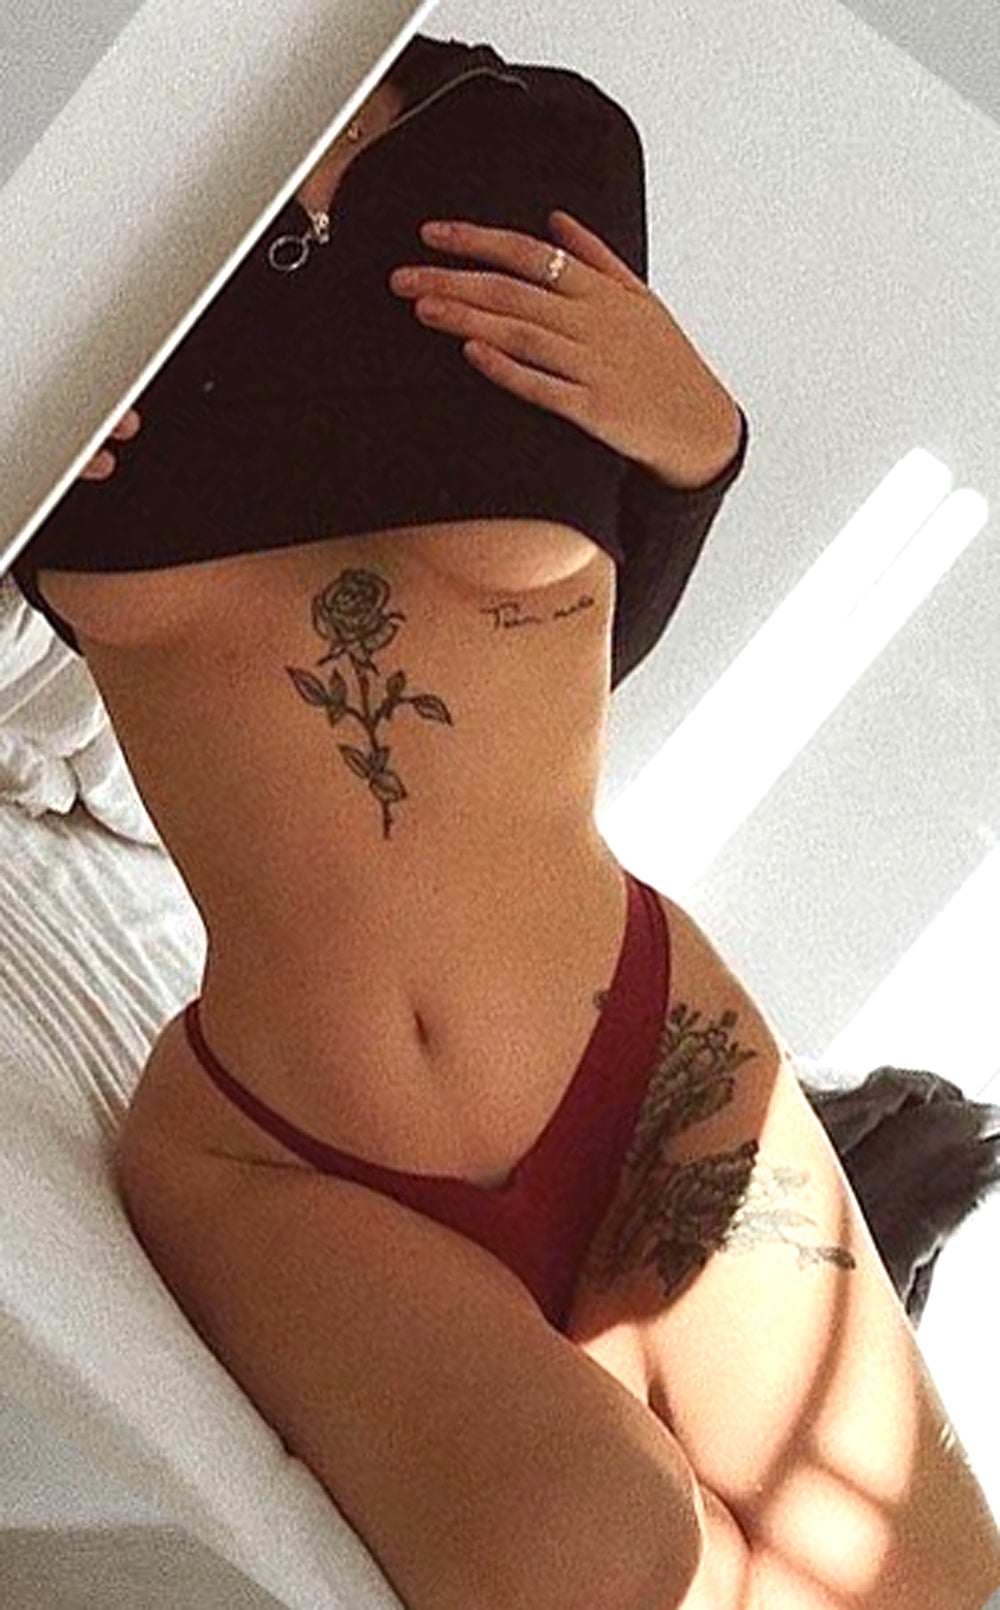 Women's Pretty Single Rose Sternum Tattoo Ideas - Simple Black Floral Flower Underboob Tatt -  ideas bastante simples del tatuaje del arcón de rosas para las mujeres - MyBodiArt.com